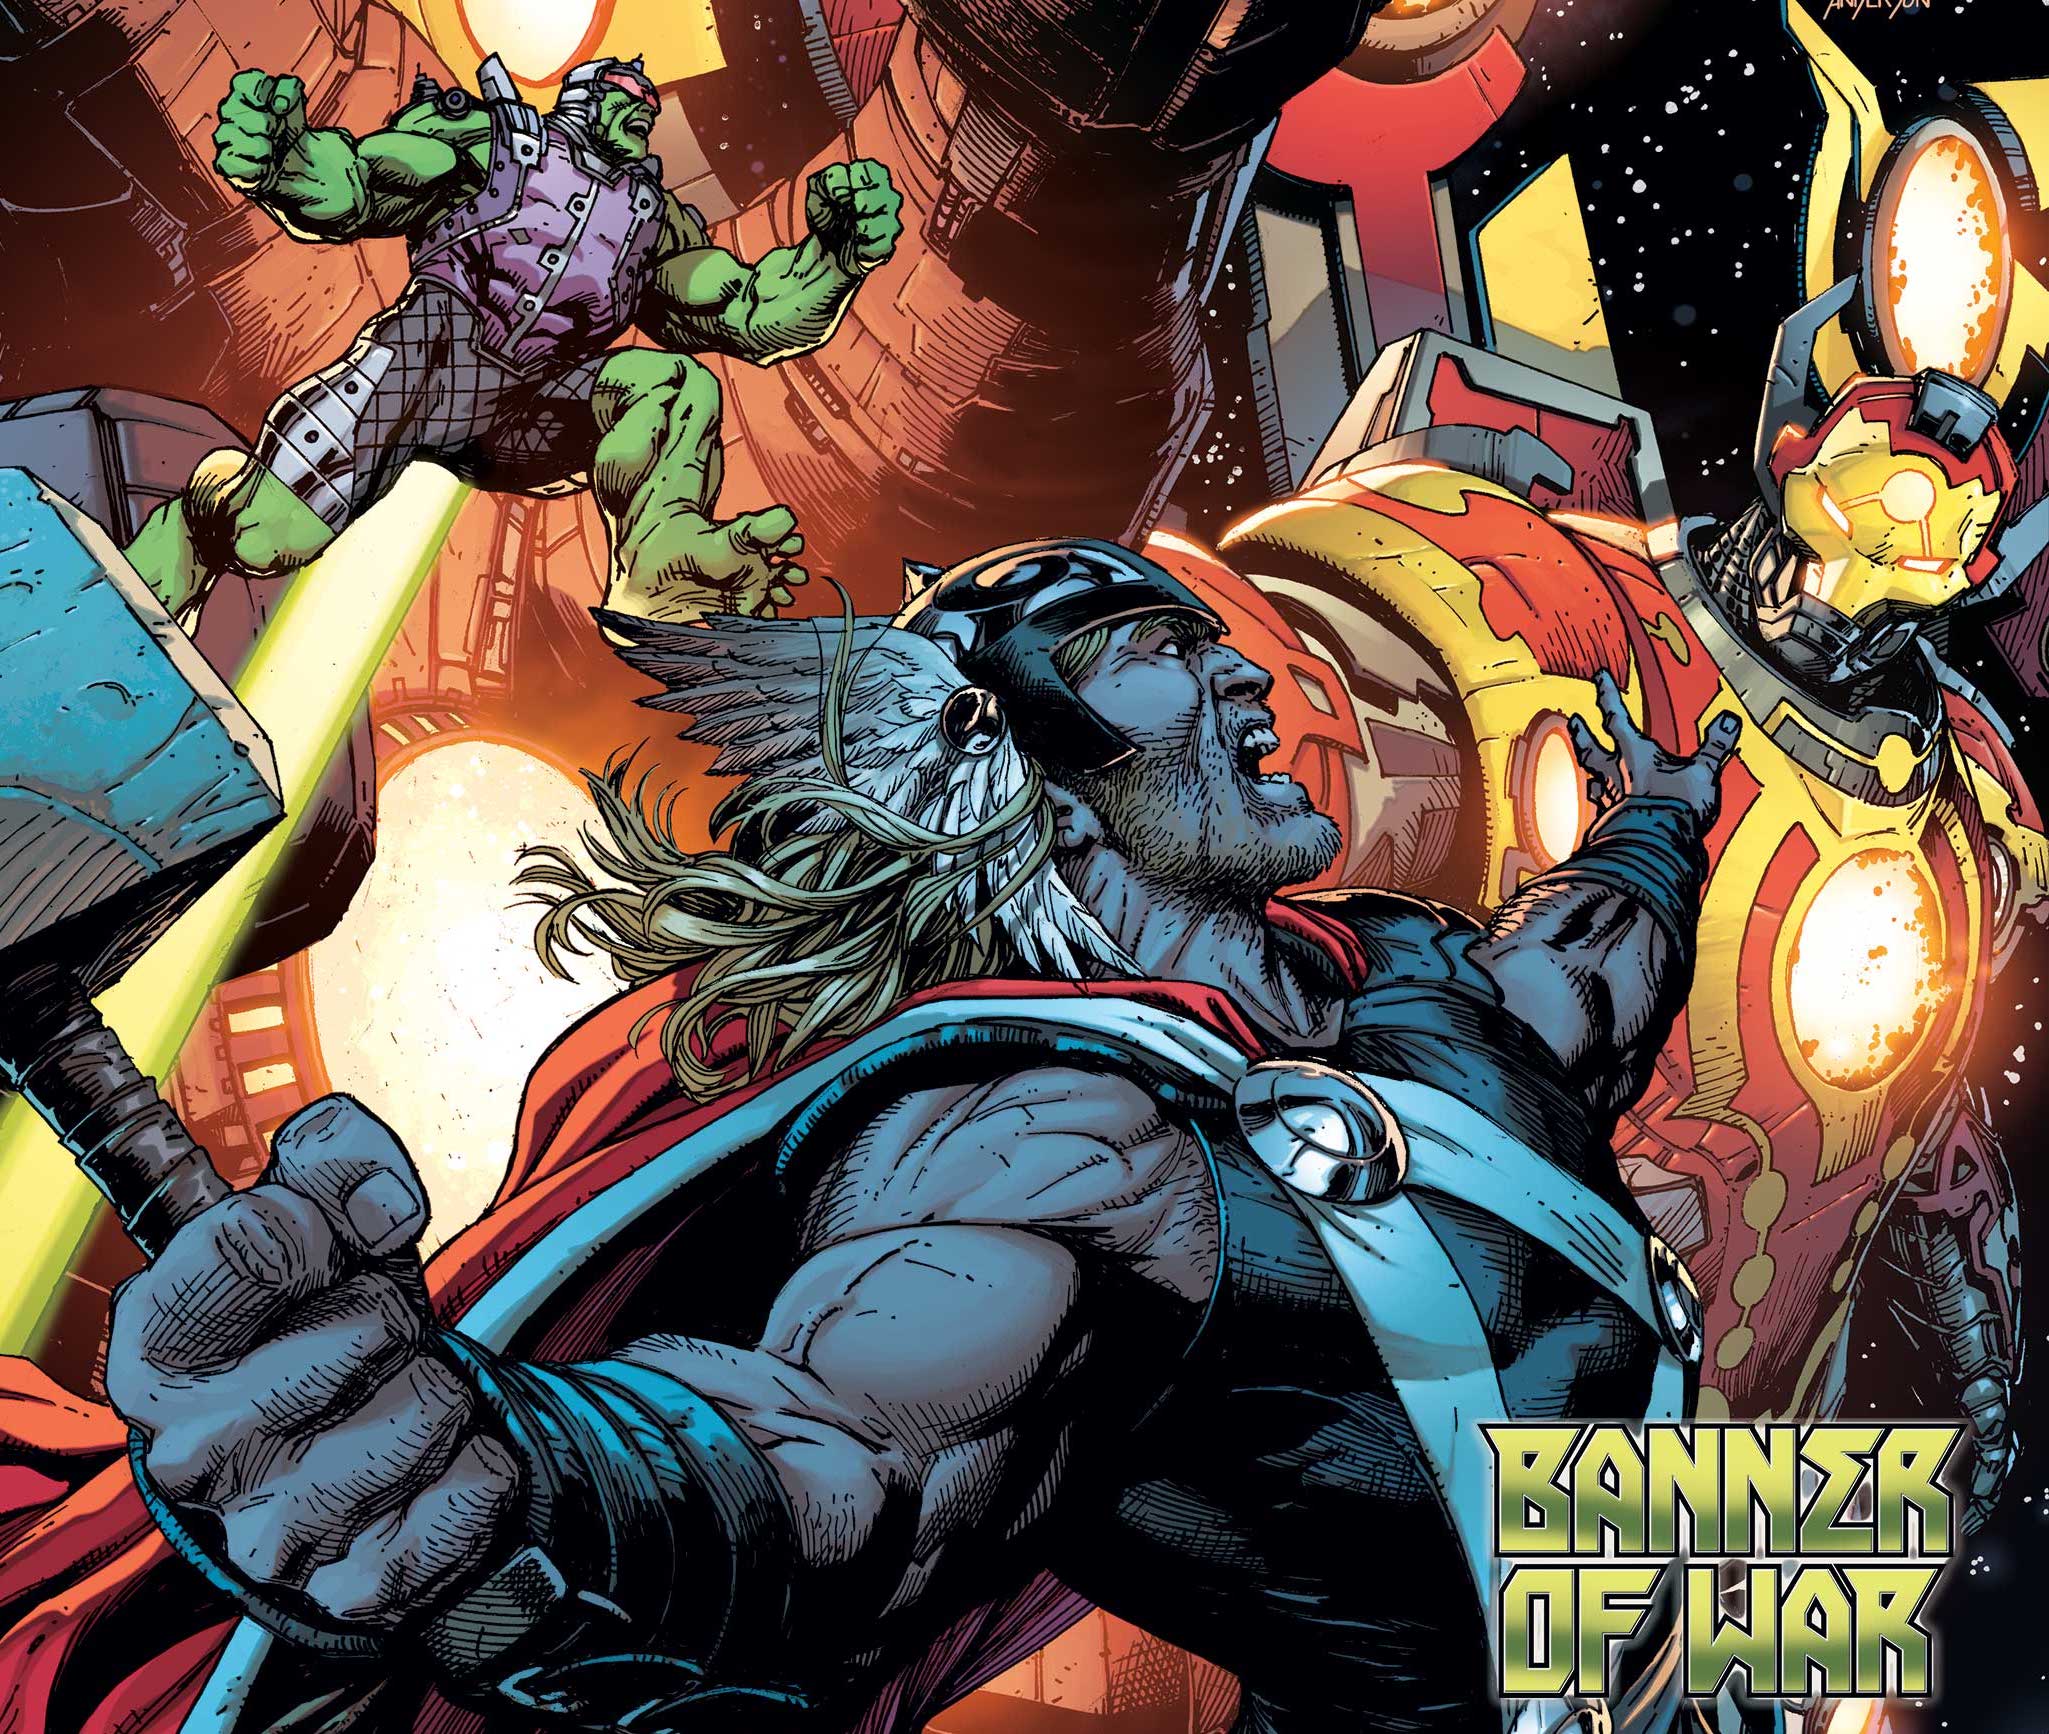 Marvel gives new details on 'Hulk vs. Thor: Banner of War'